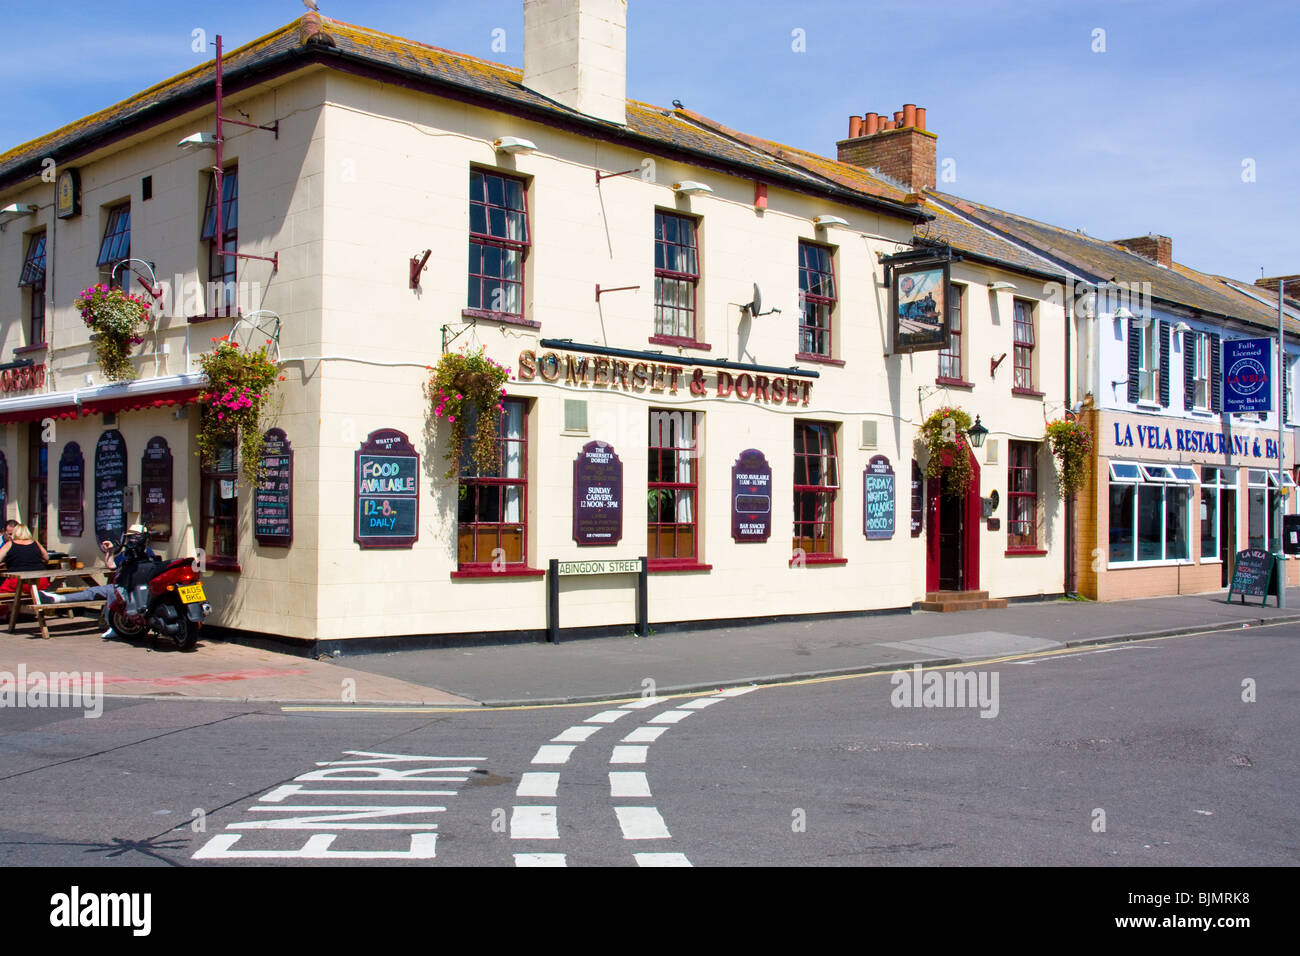 The Somerset and Dorset pub. Burnham On Sea Stock Photo